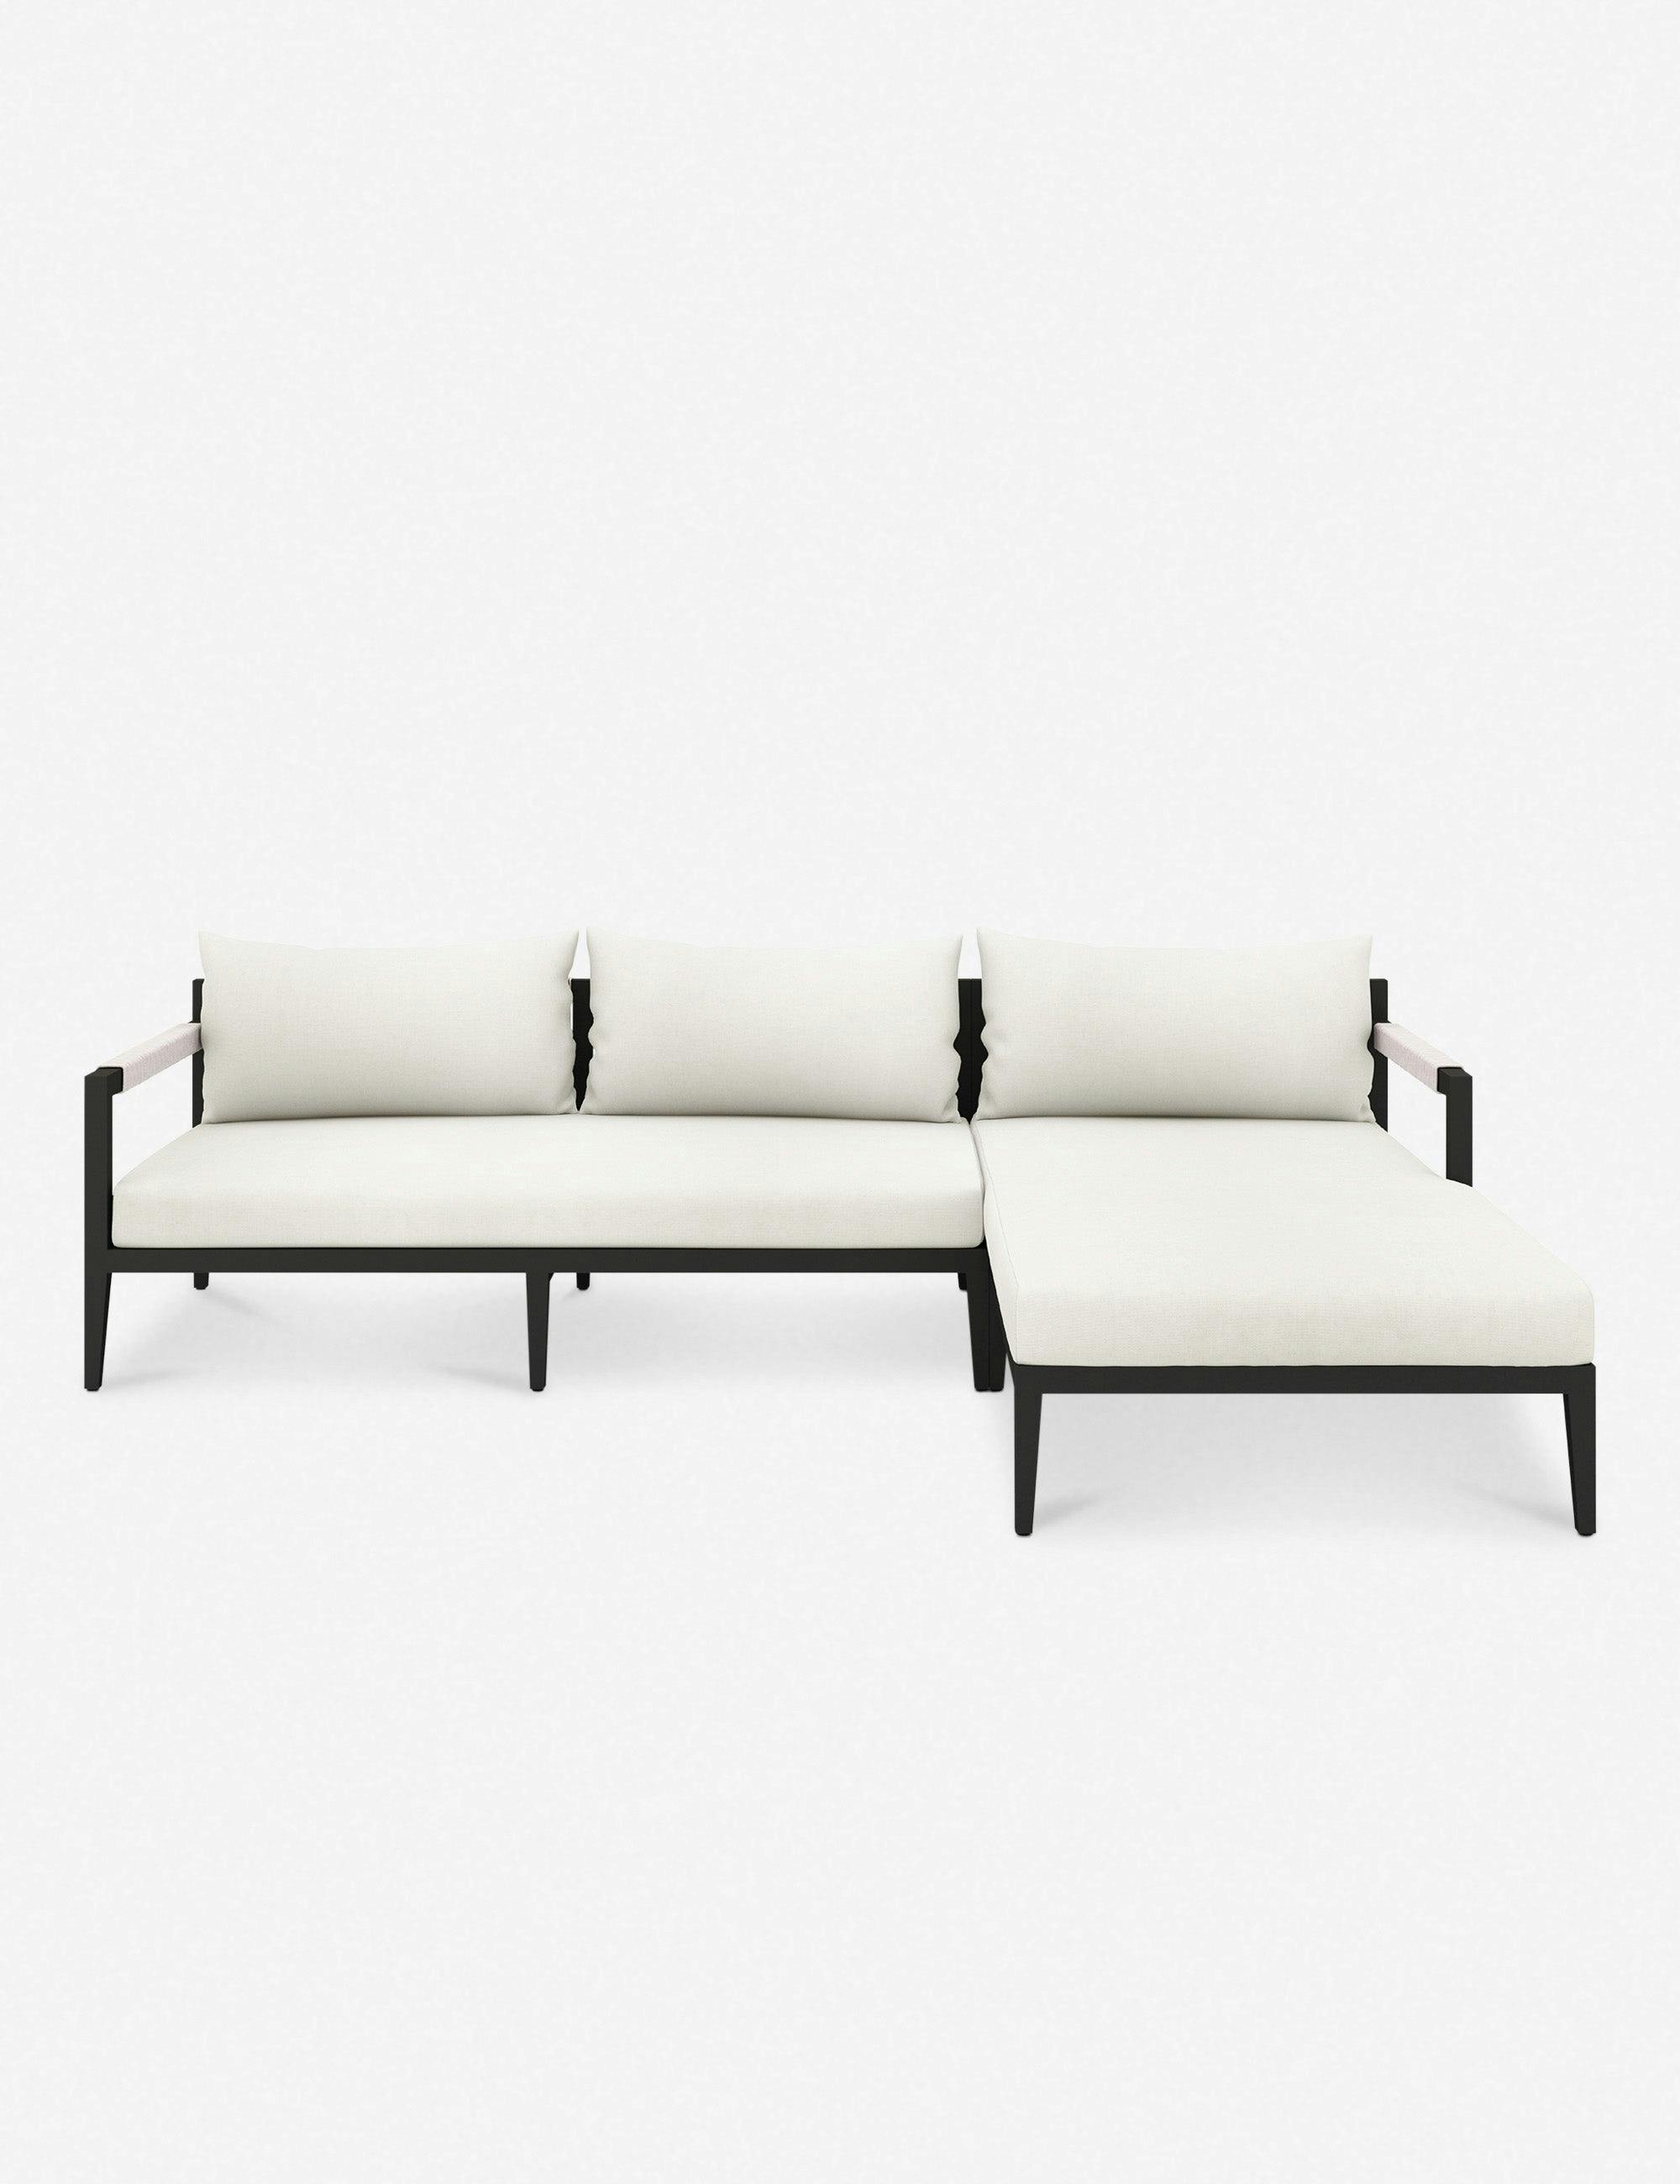 Cadenza Bronze/Ivory Metal 3-Seat Outdoor Sectional Sofa